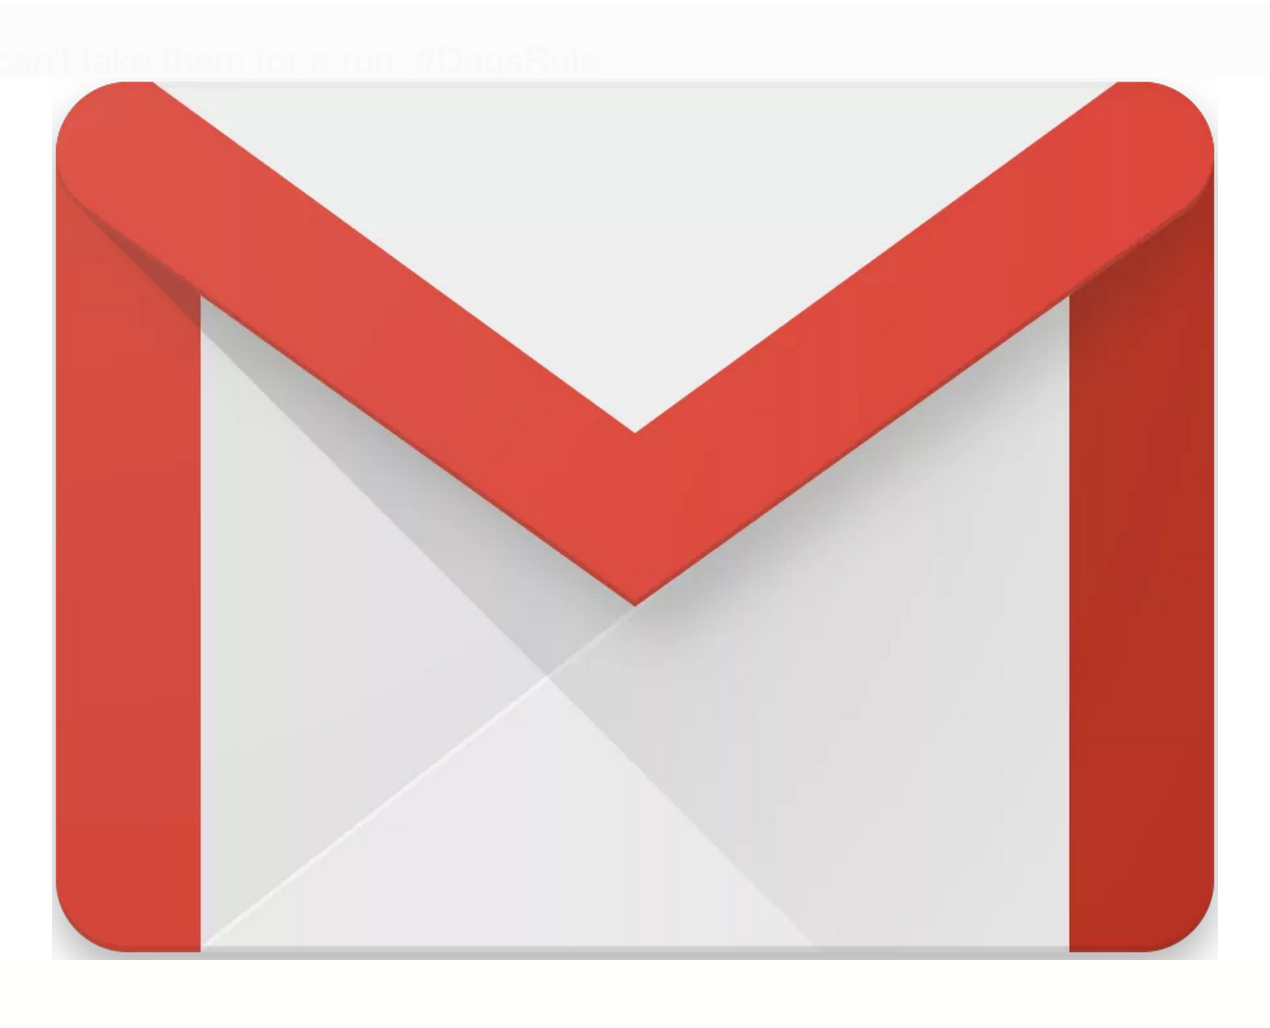 Gmail Mic Drop